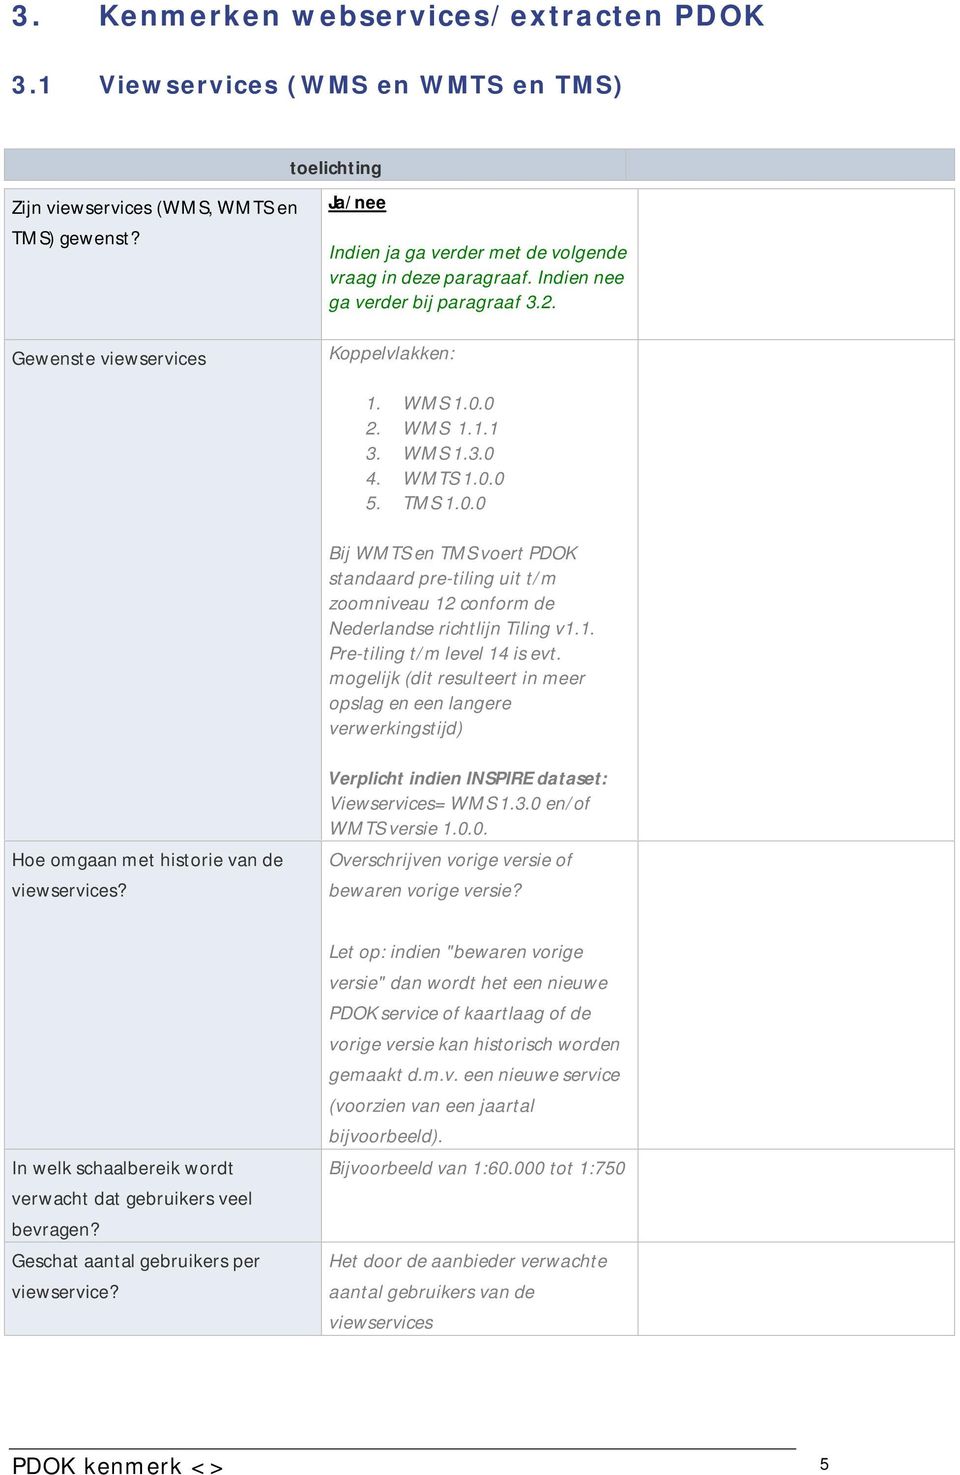 TMS 1.0.0 Bij WMTS en TMS voert PDOK standaard pre-tiling uit t/m zoomniveau 12 conform de Nederlandse richtlijn Tiling v1.1. Pre-tiling t/m level 14 is evt.